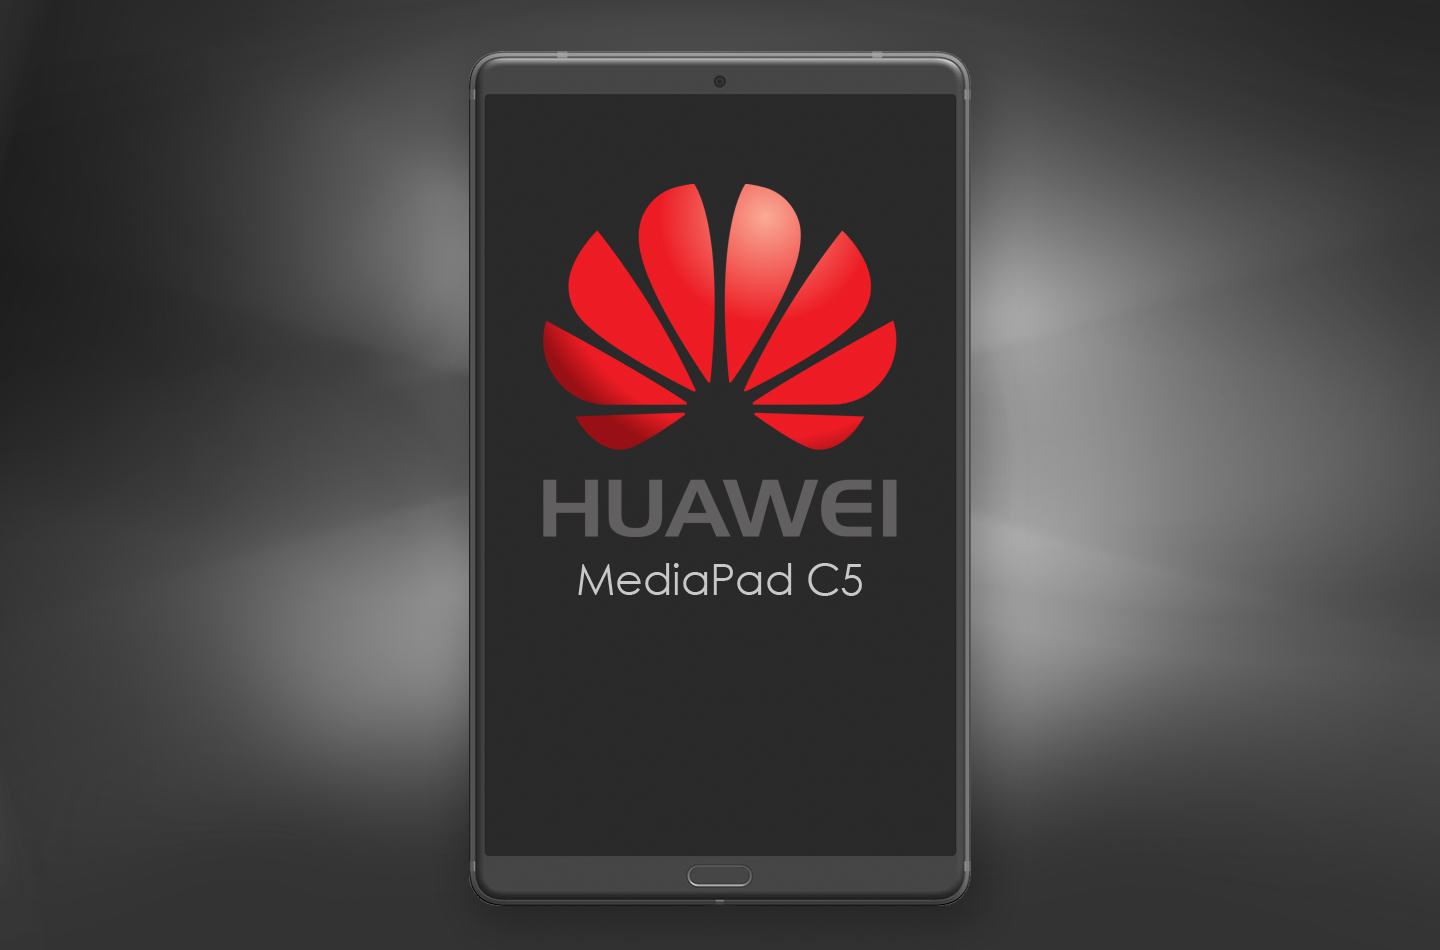 Huawei Mediapad C5